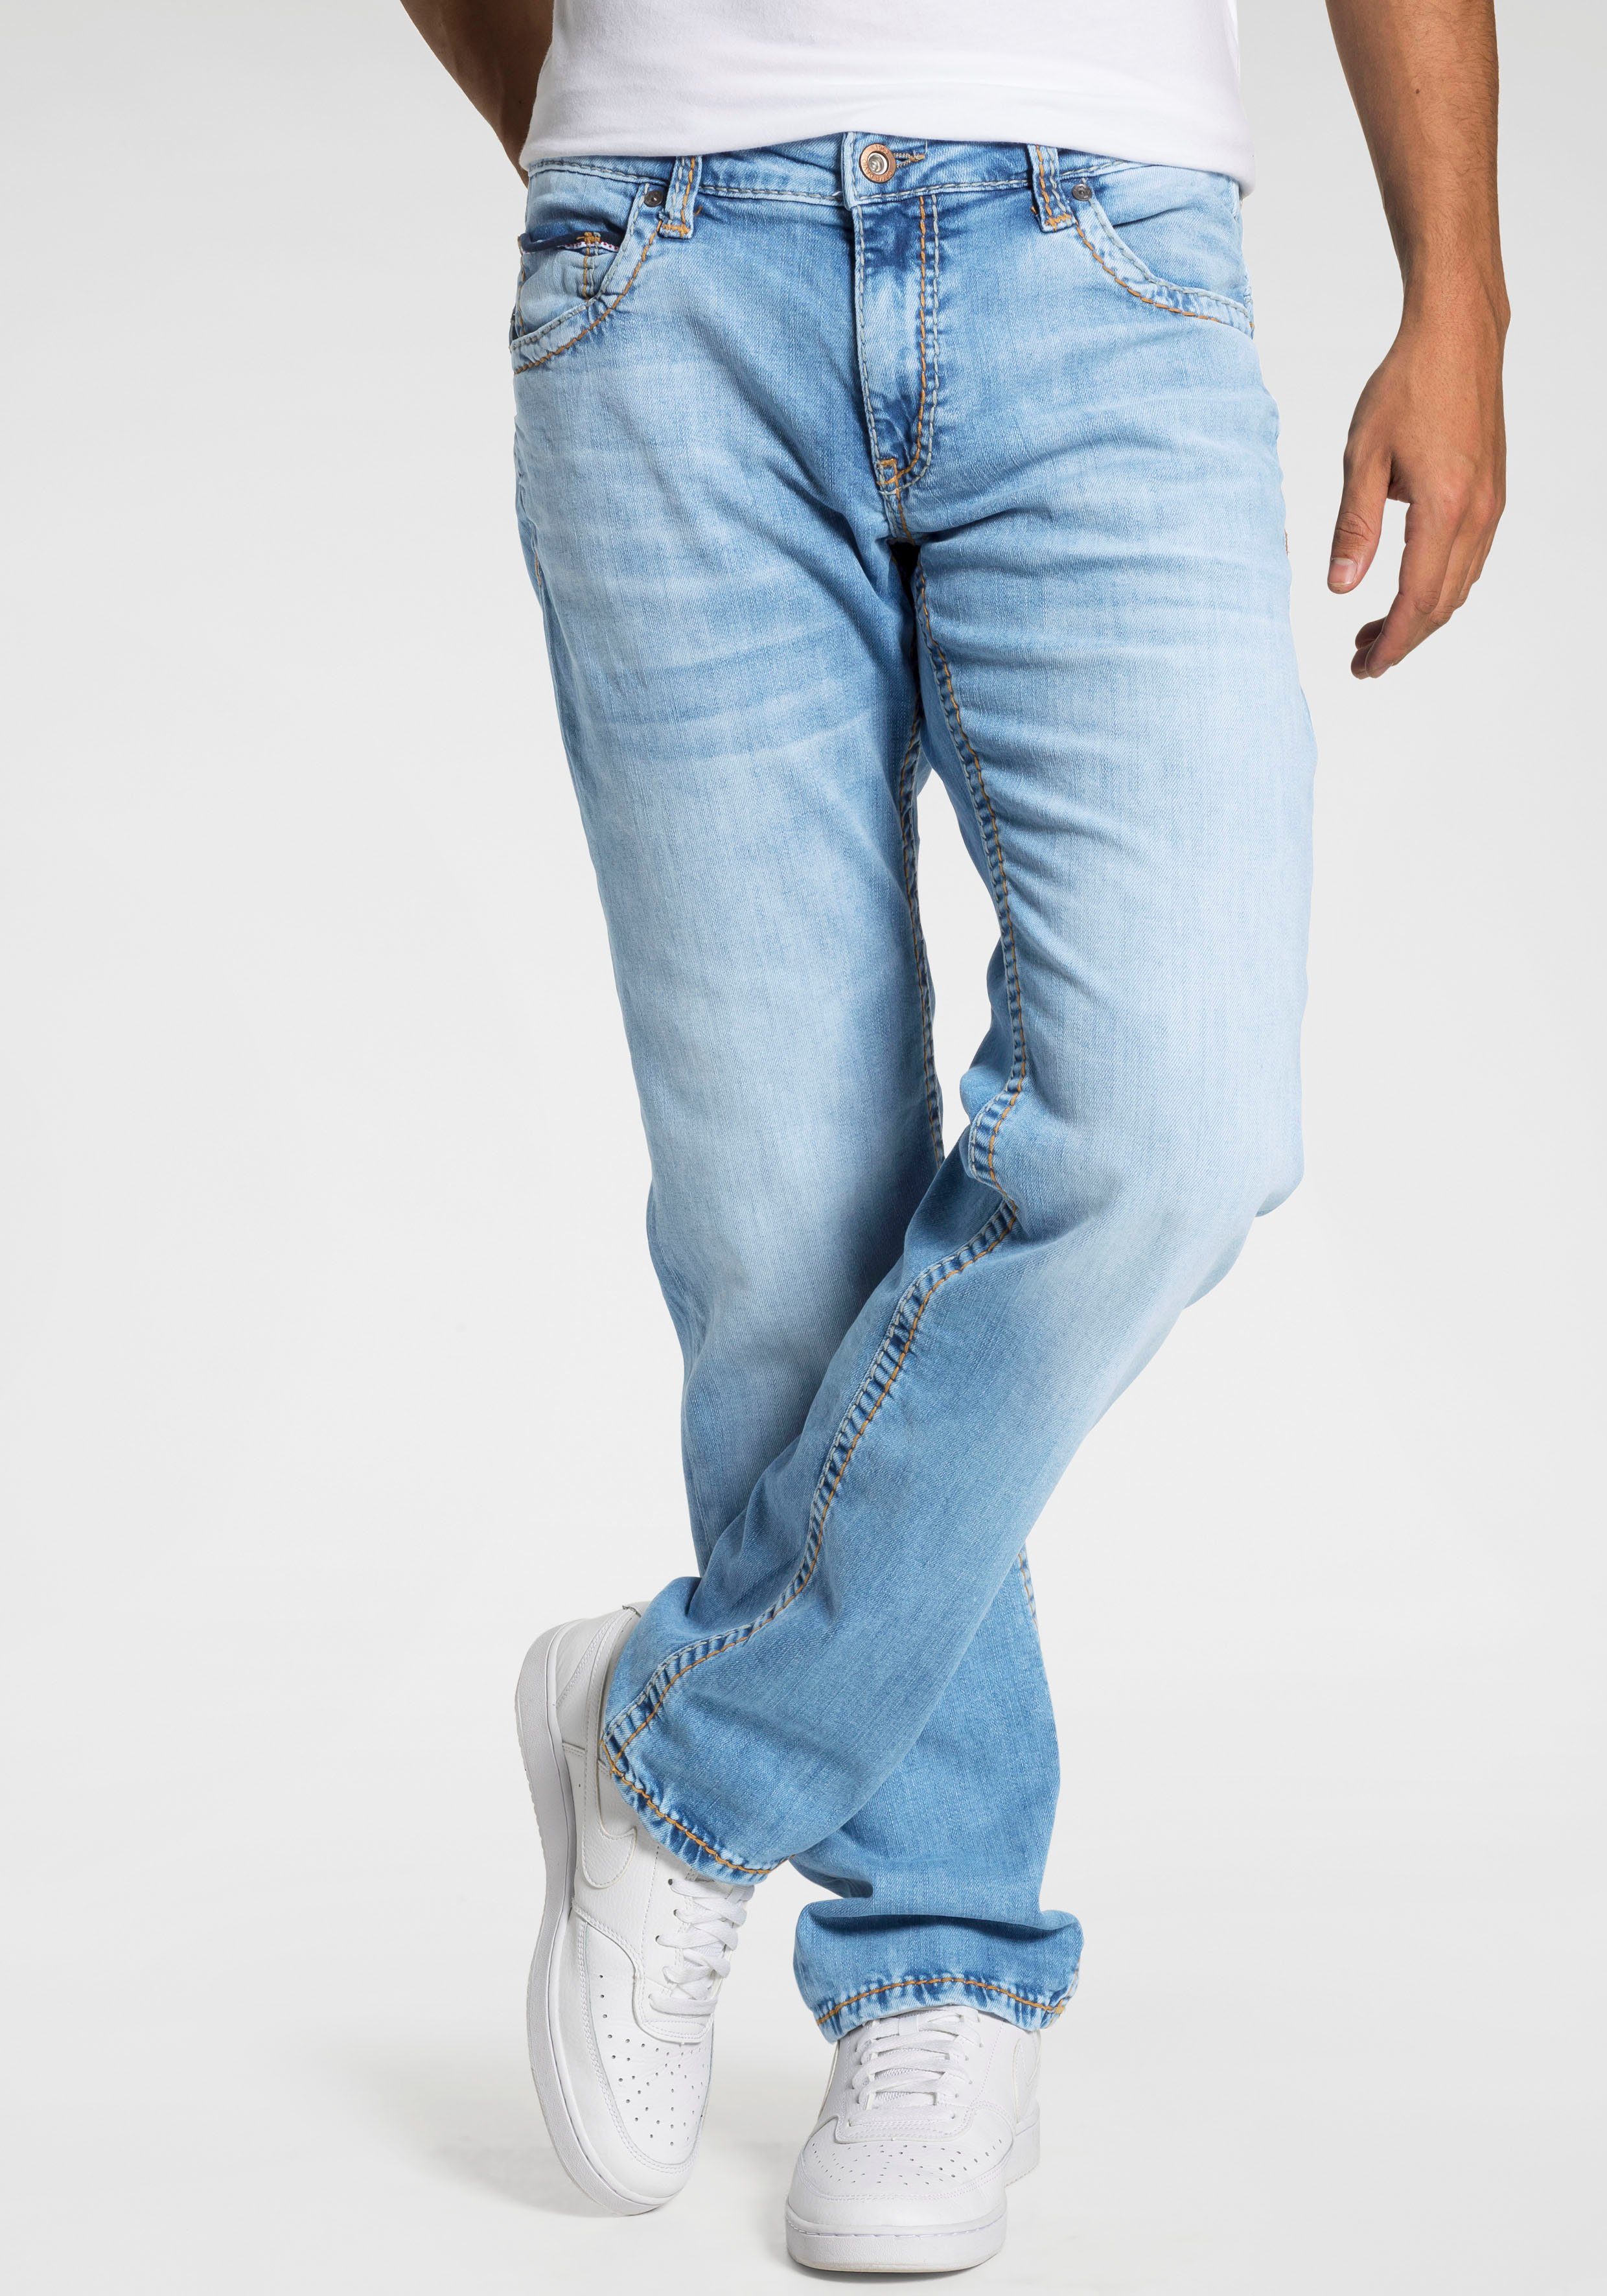 CAMP DAVID Loose-fit-Jeans »CO:NO:C622« mit markanten Nähten online kaufen  | OTTO